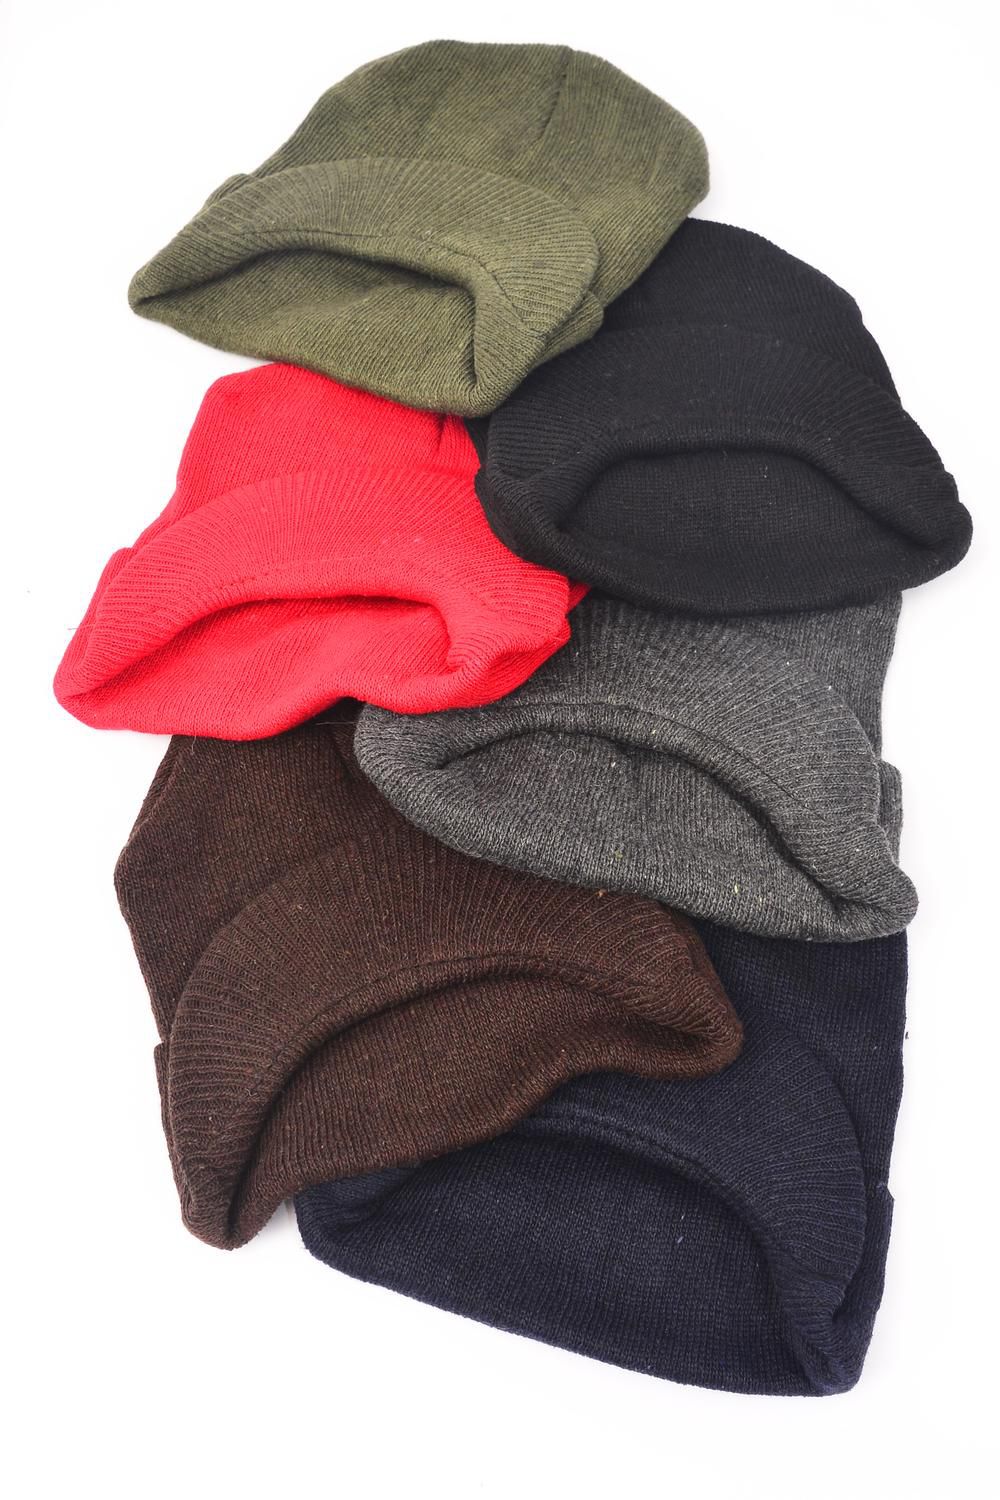 Knit Cap With Visor/DZ Choose Colors,OPP Bag & UPC Code | www ...